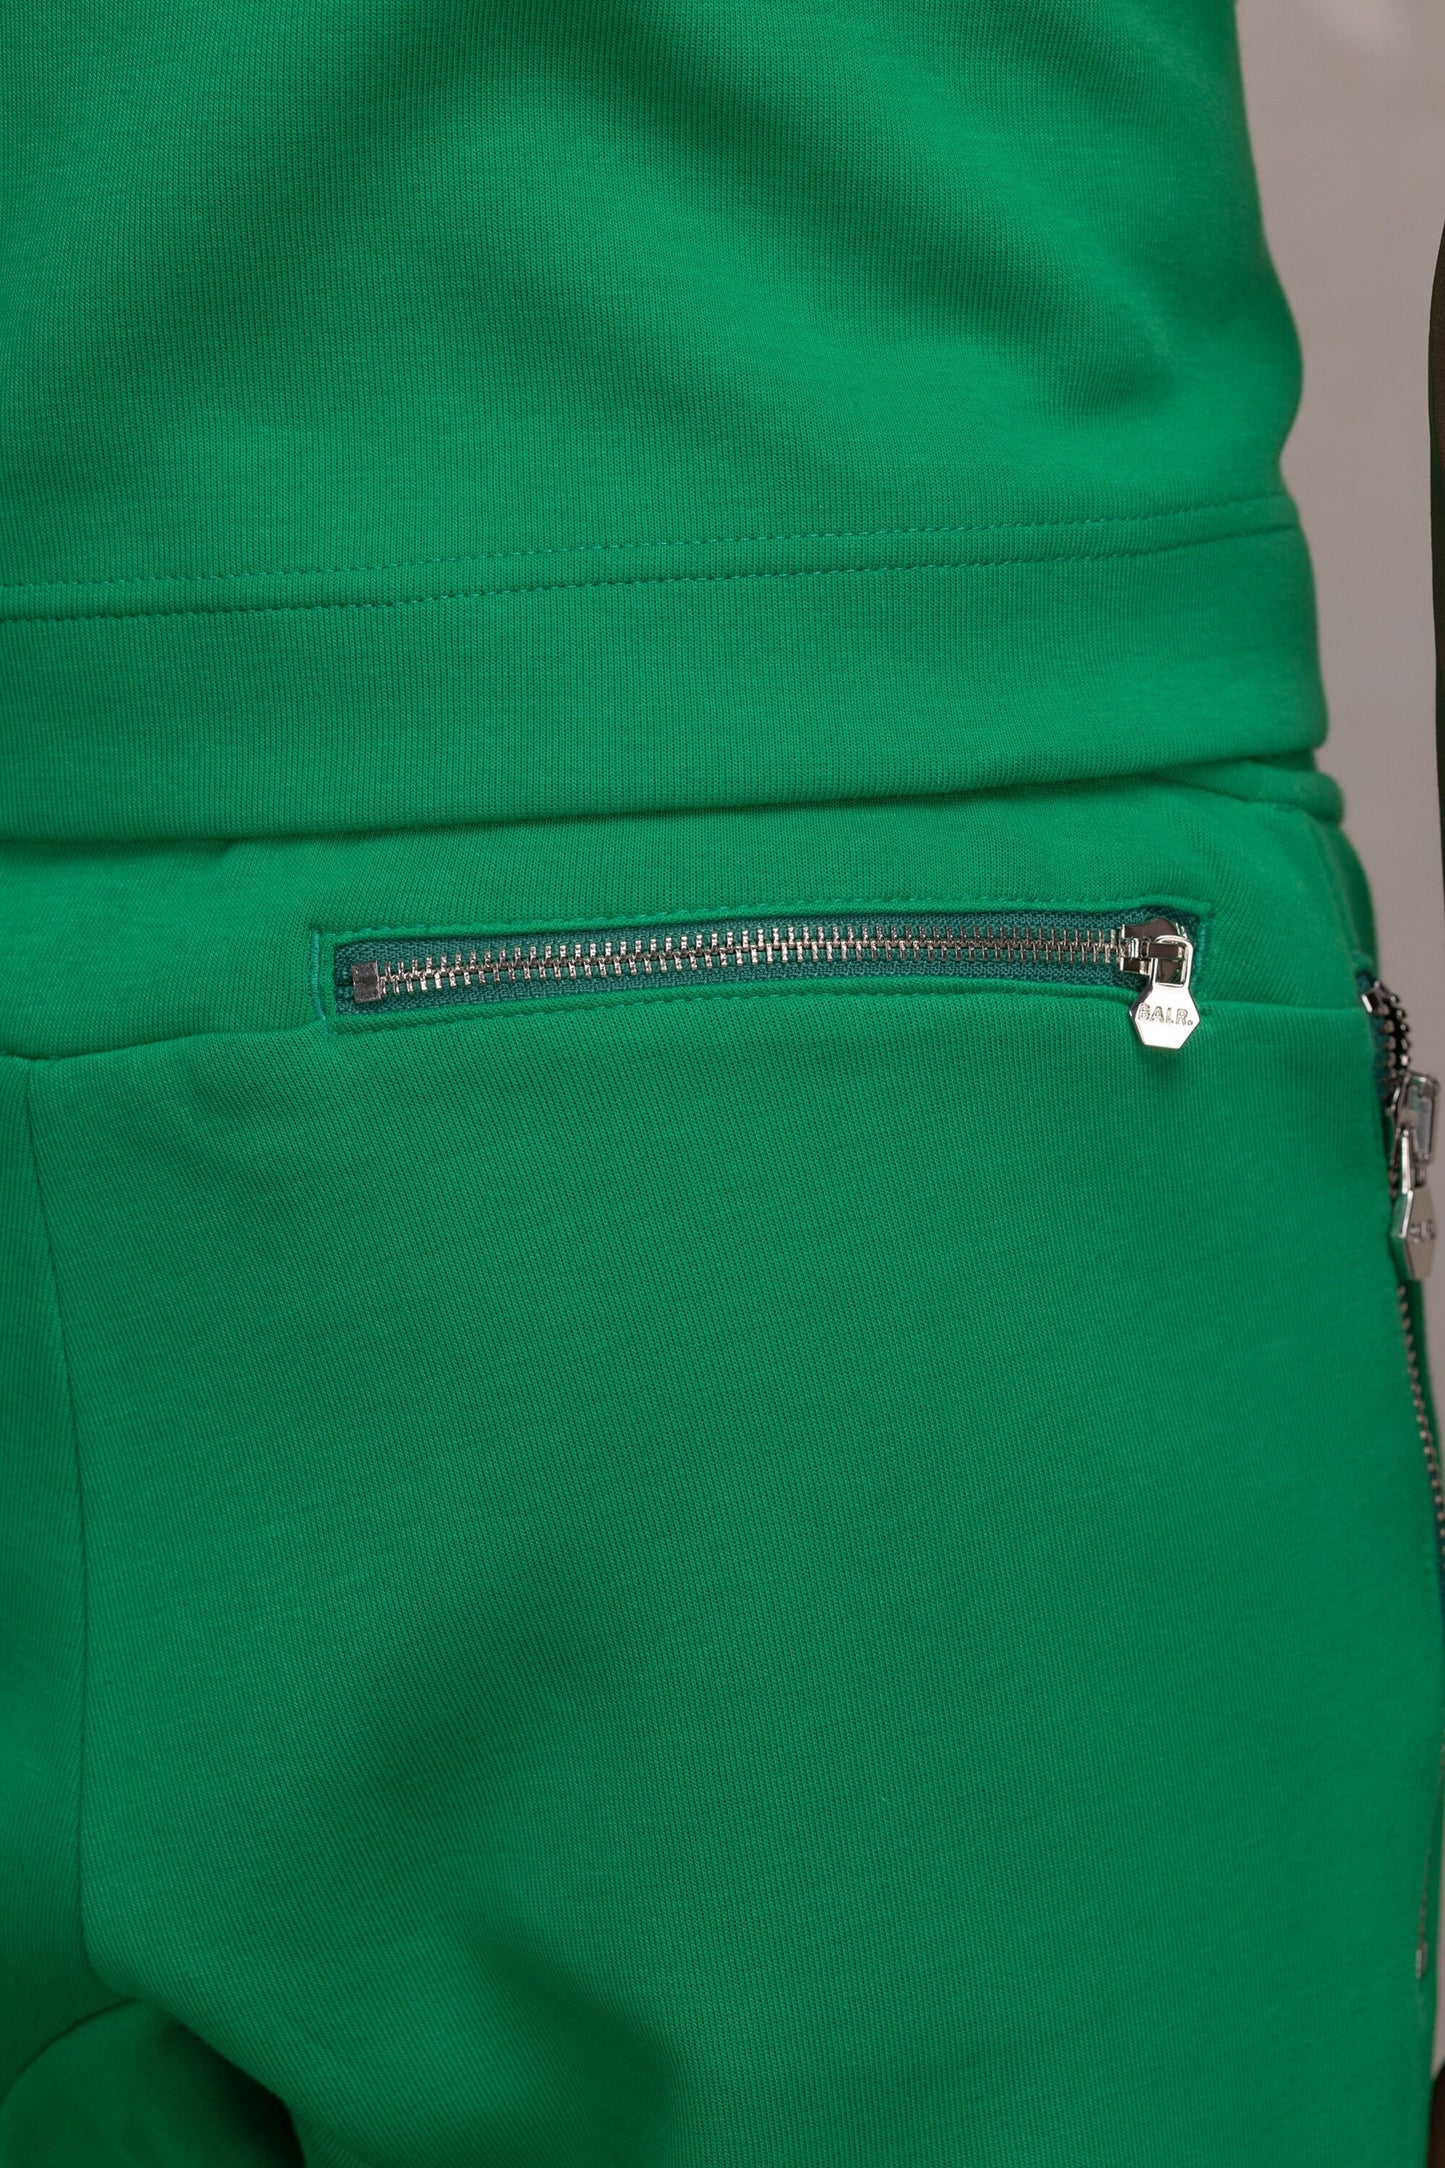 Q-Series Slim Classic Sweatpants Putting Green